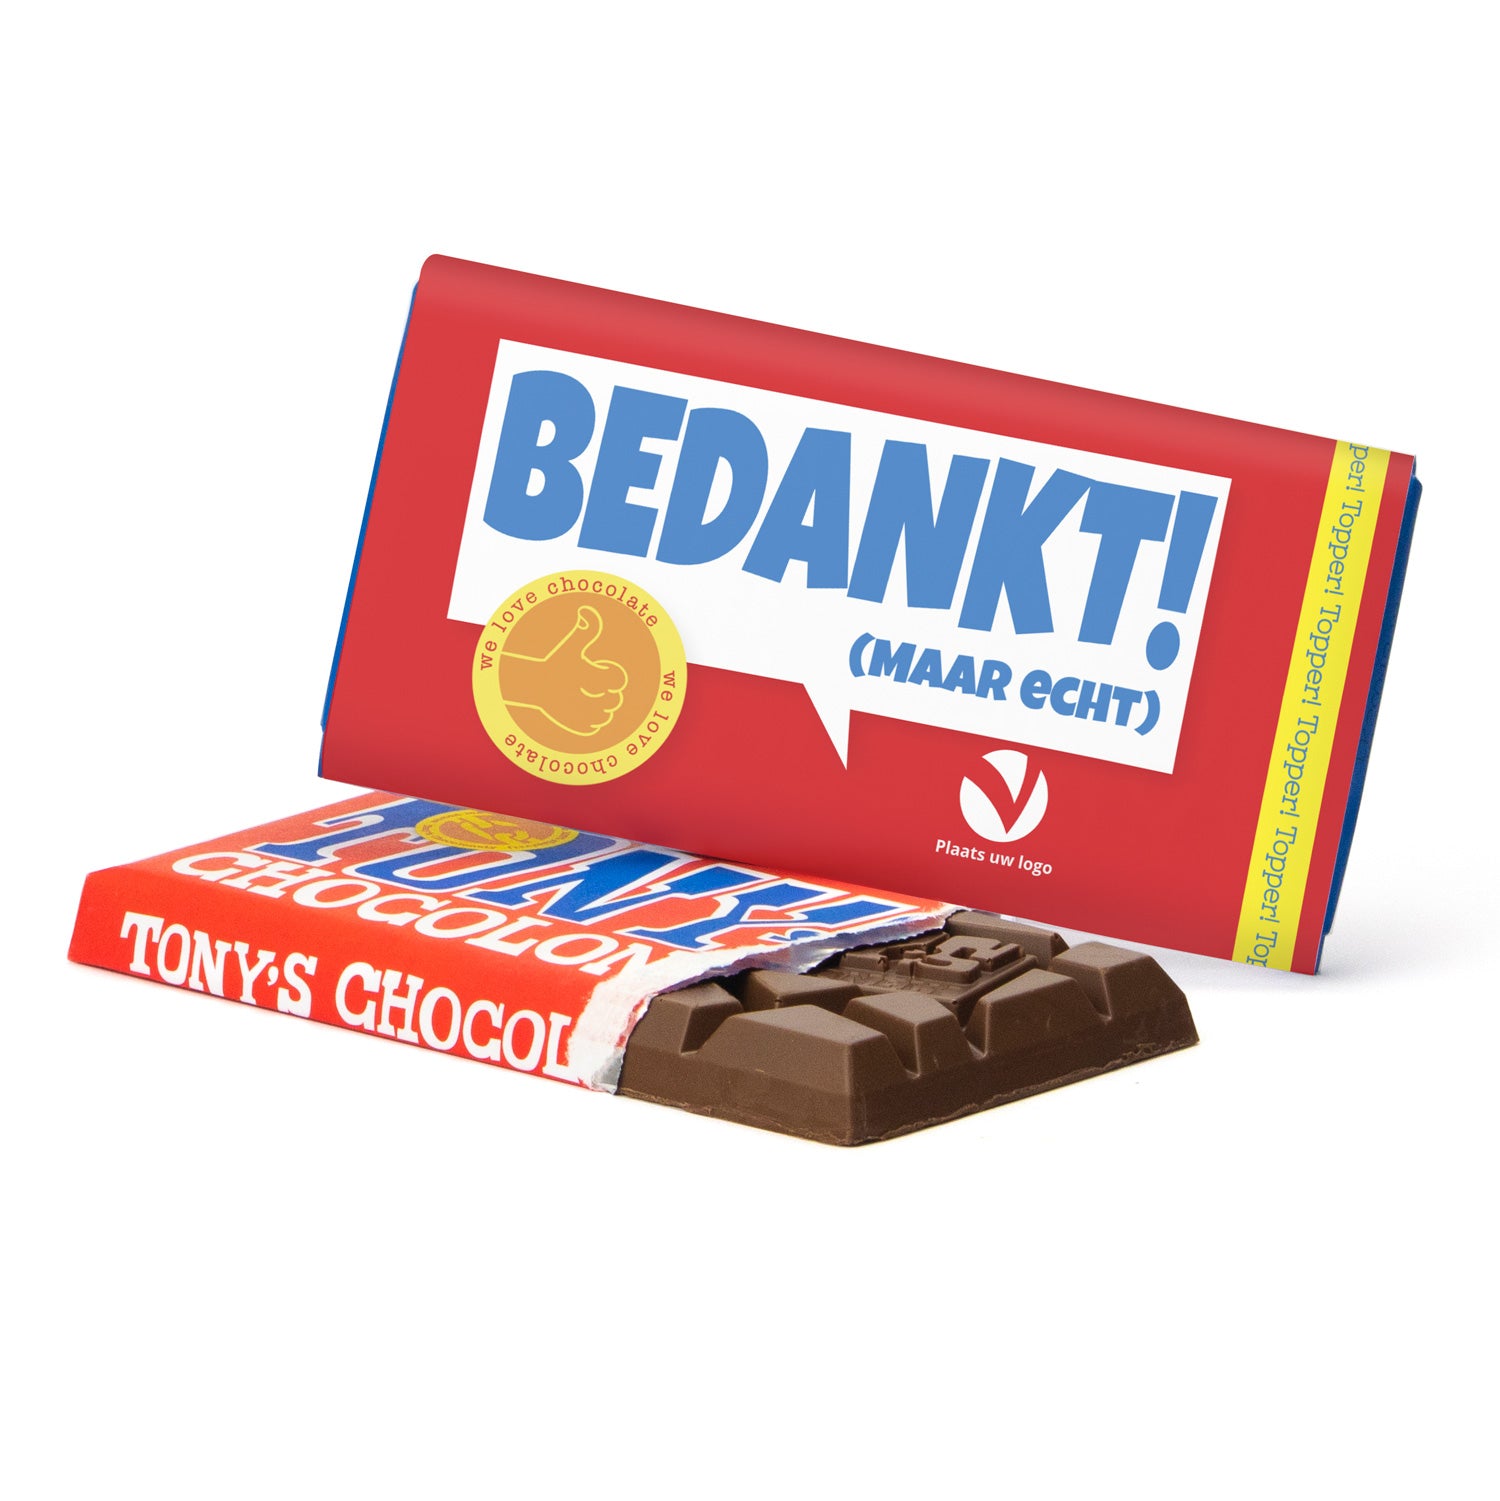 Grote Tony's Chocolonely - Afscheid Collega's - Bedankjes.nl